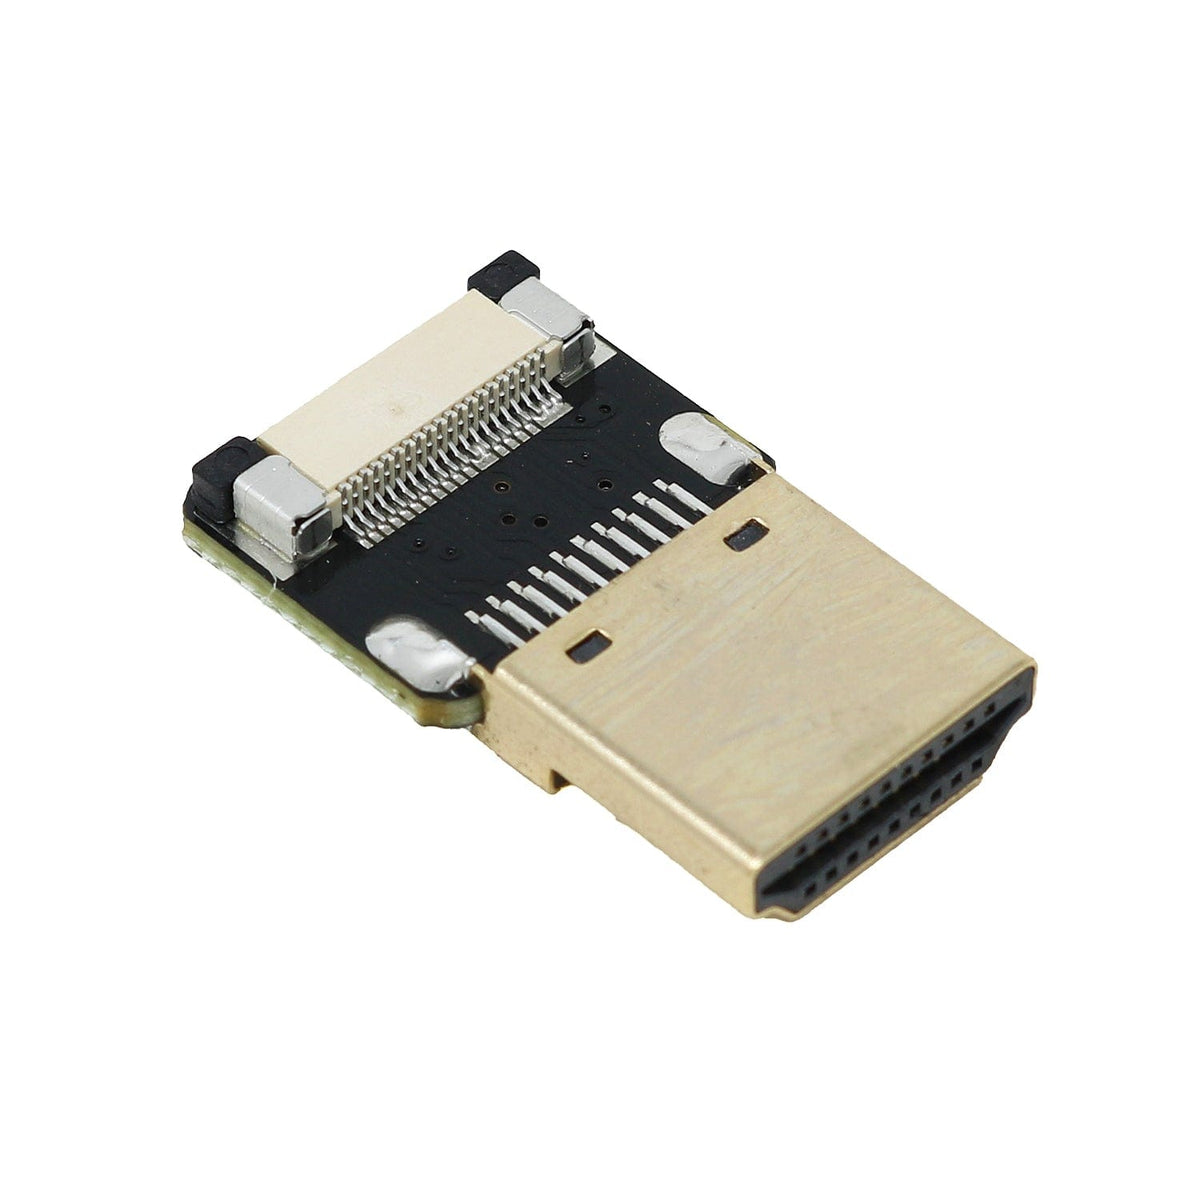 DIY HDMI Cable Parts - Straight Micro HDMI Plug Adapter : ID 3556